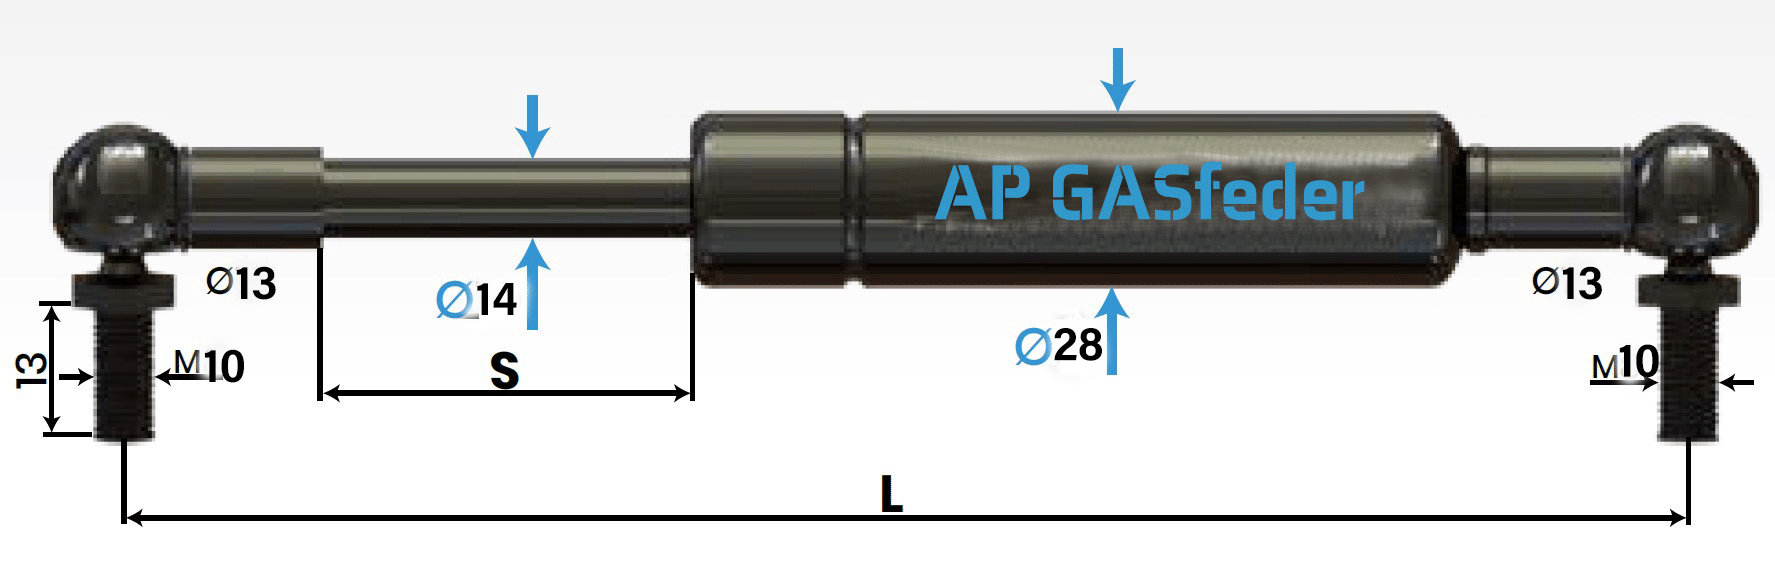 Image de AP GASfeder 1300N, 14/28, Hub(S): 200 mm, Länge (L): 535 mm,  Alternatvie SRST.2036LA